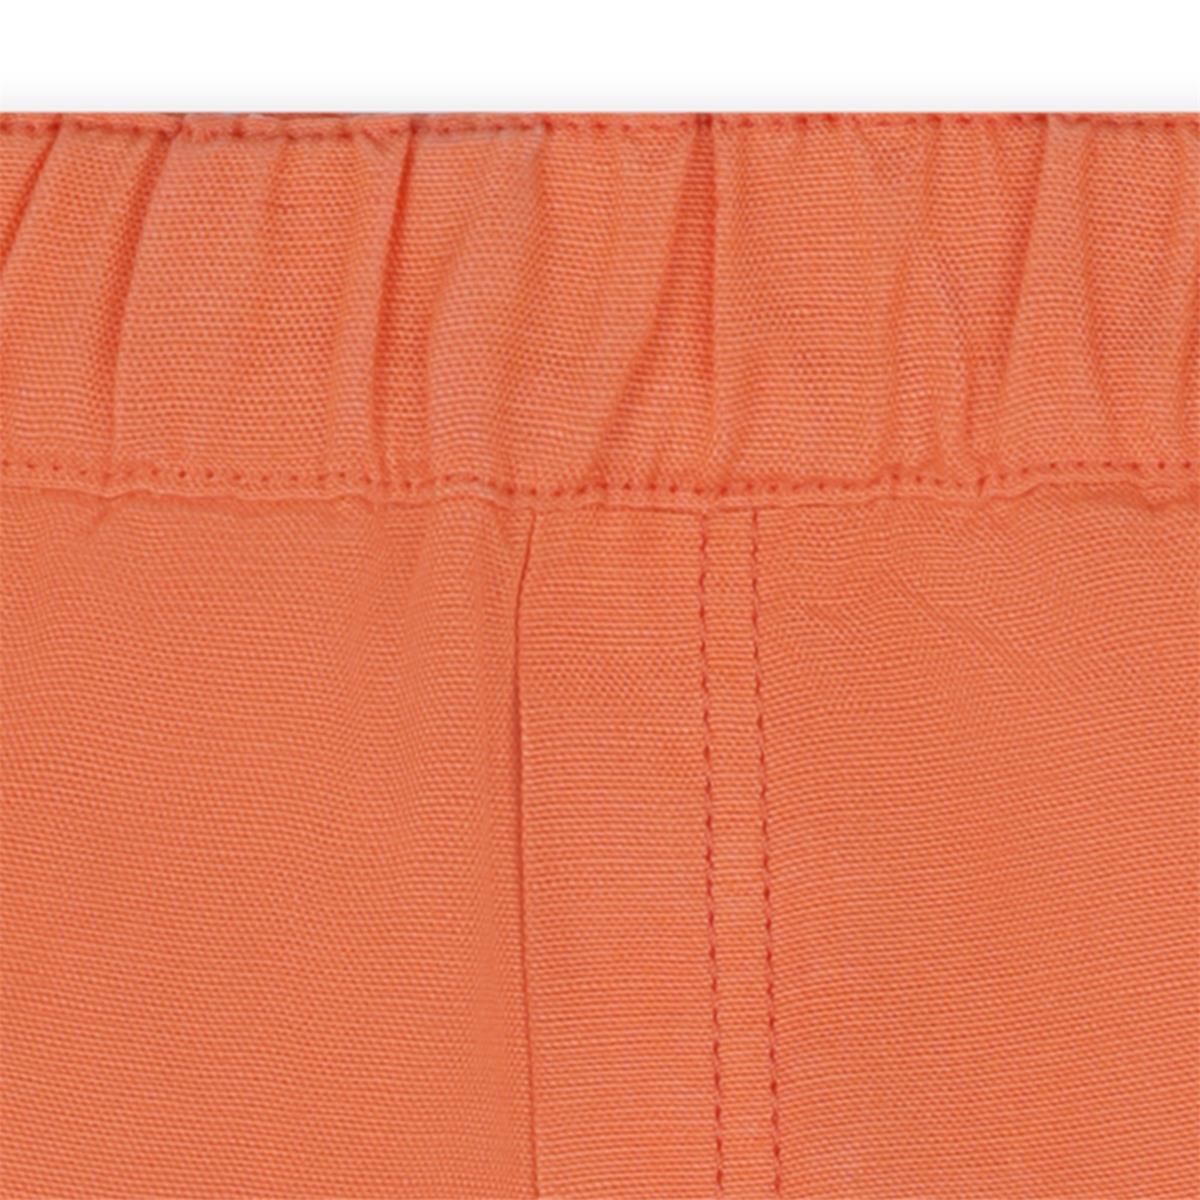 Baby Boys Orange Cotton Shorts